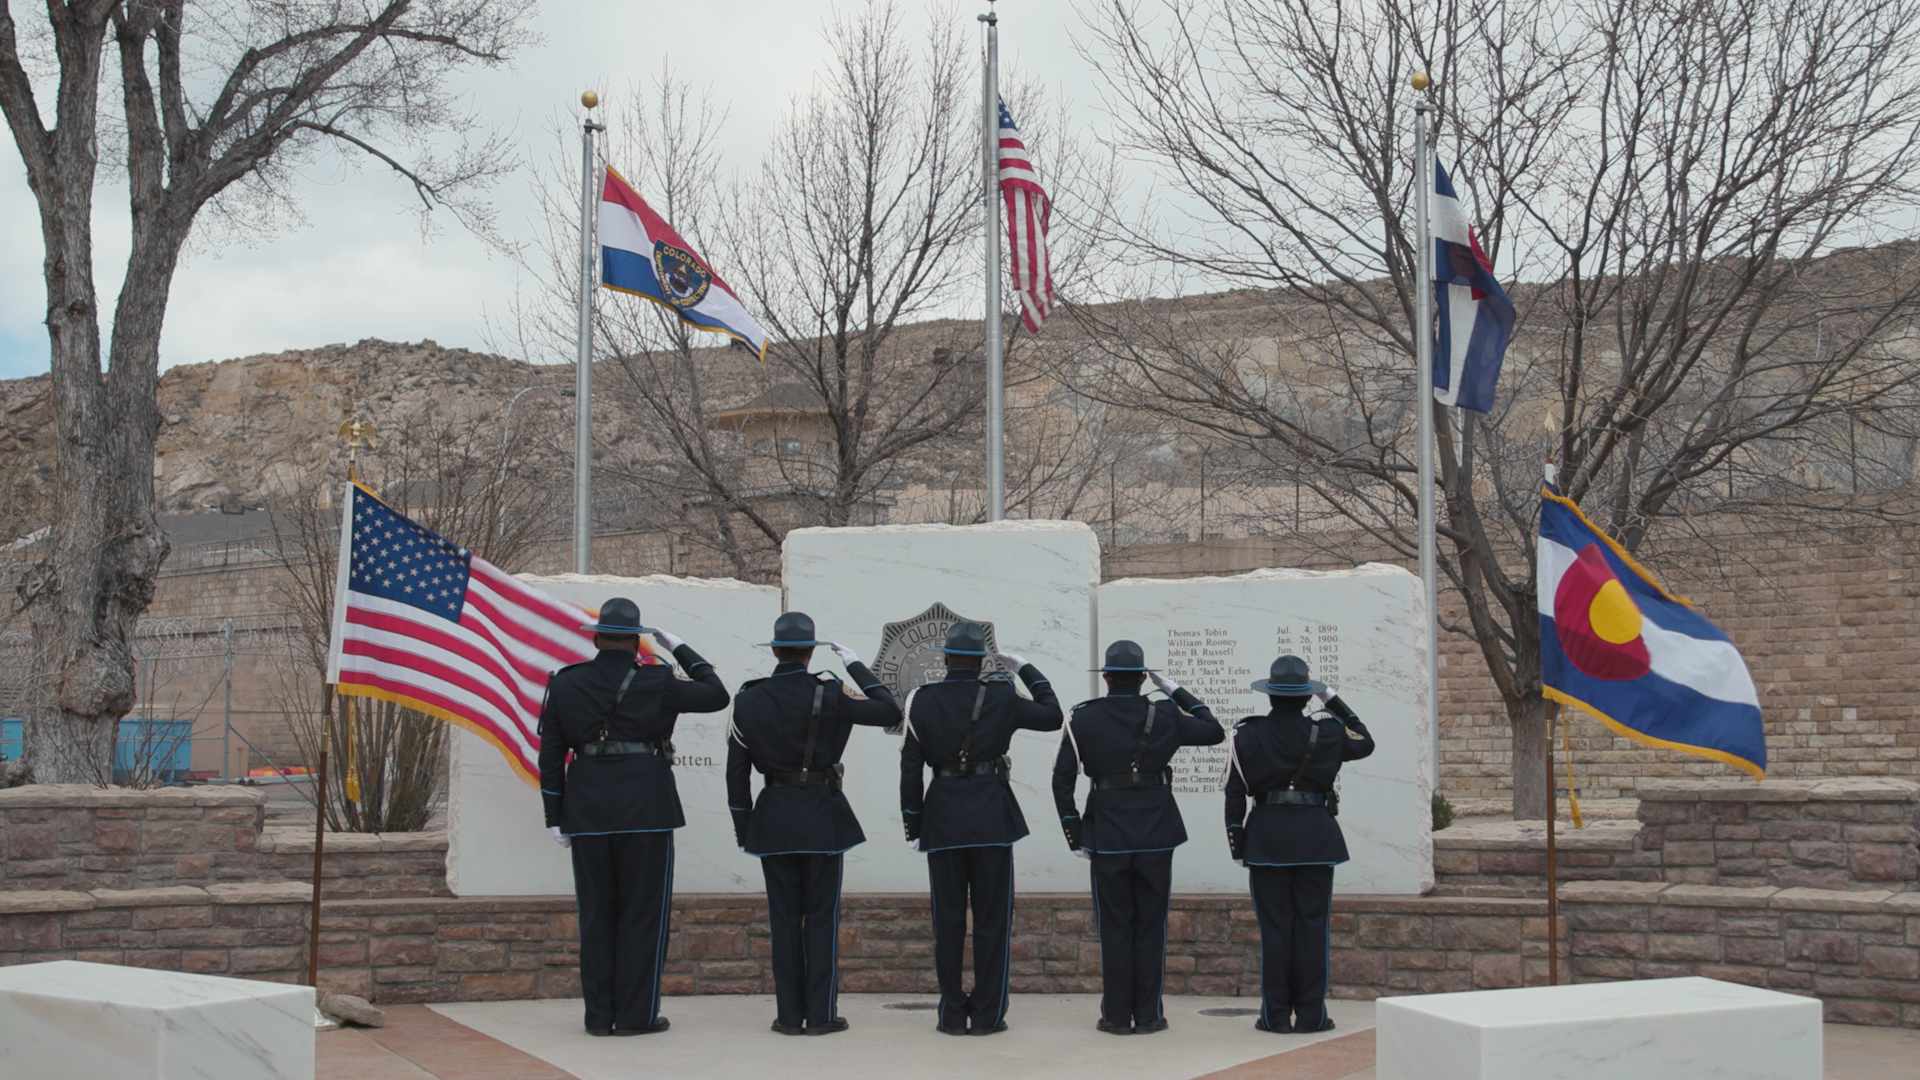 5 members of the Honor Guard salute the flag